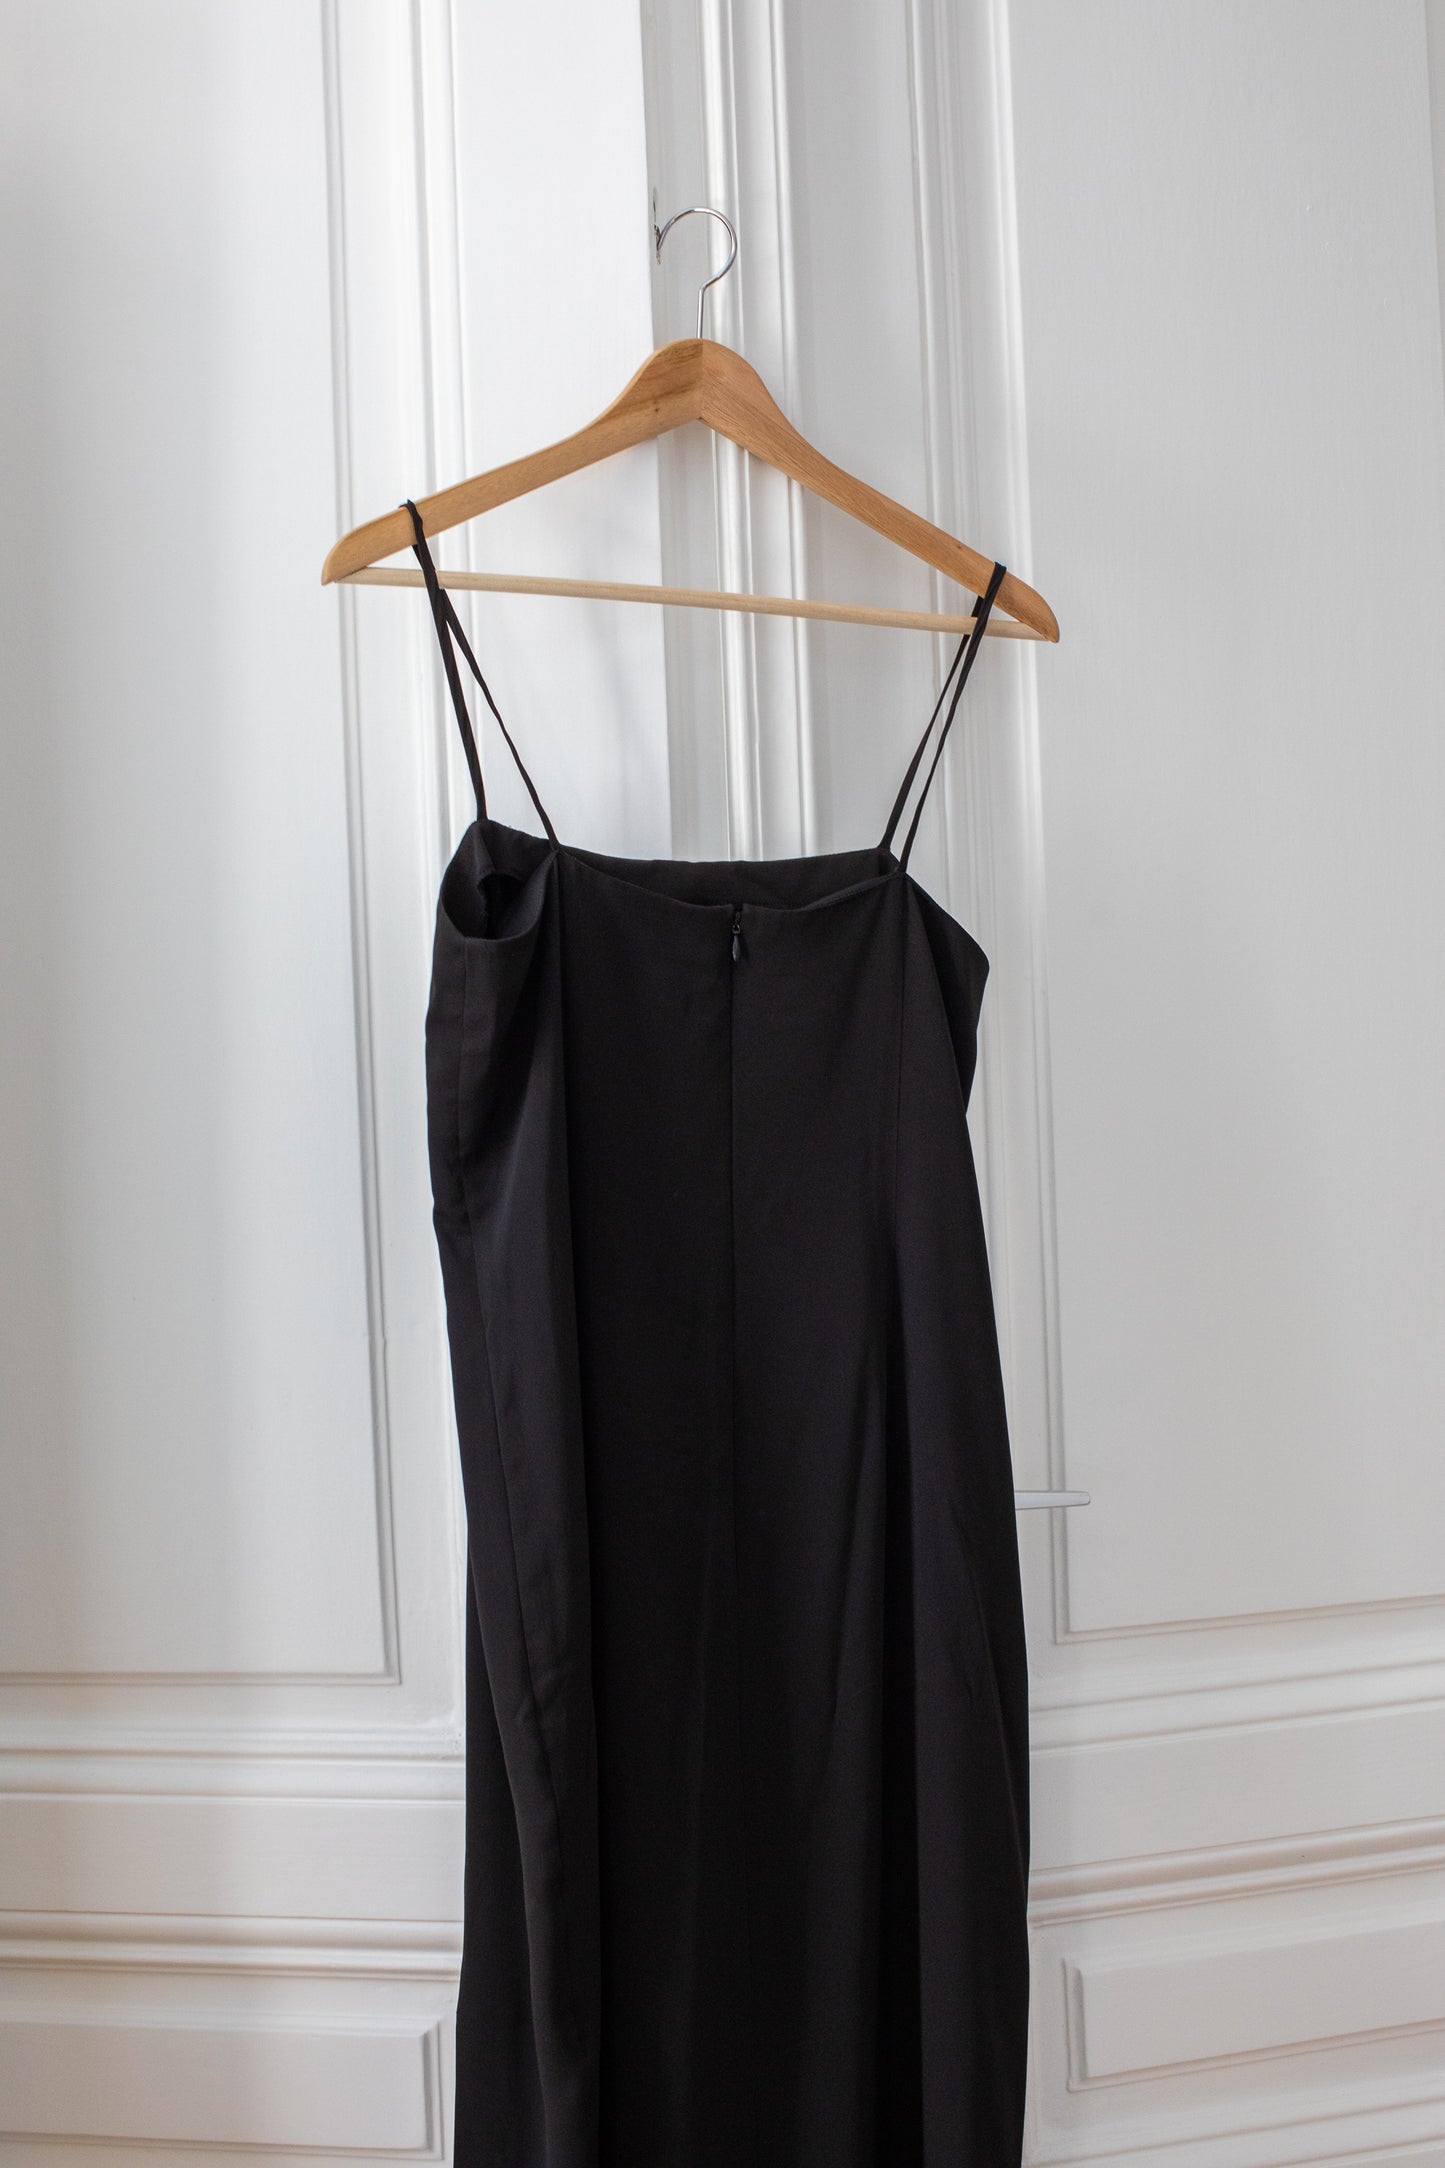 2000's Vintage Black Evening Dress by Max Mara Size S-M